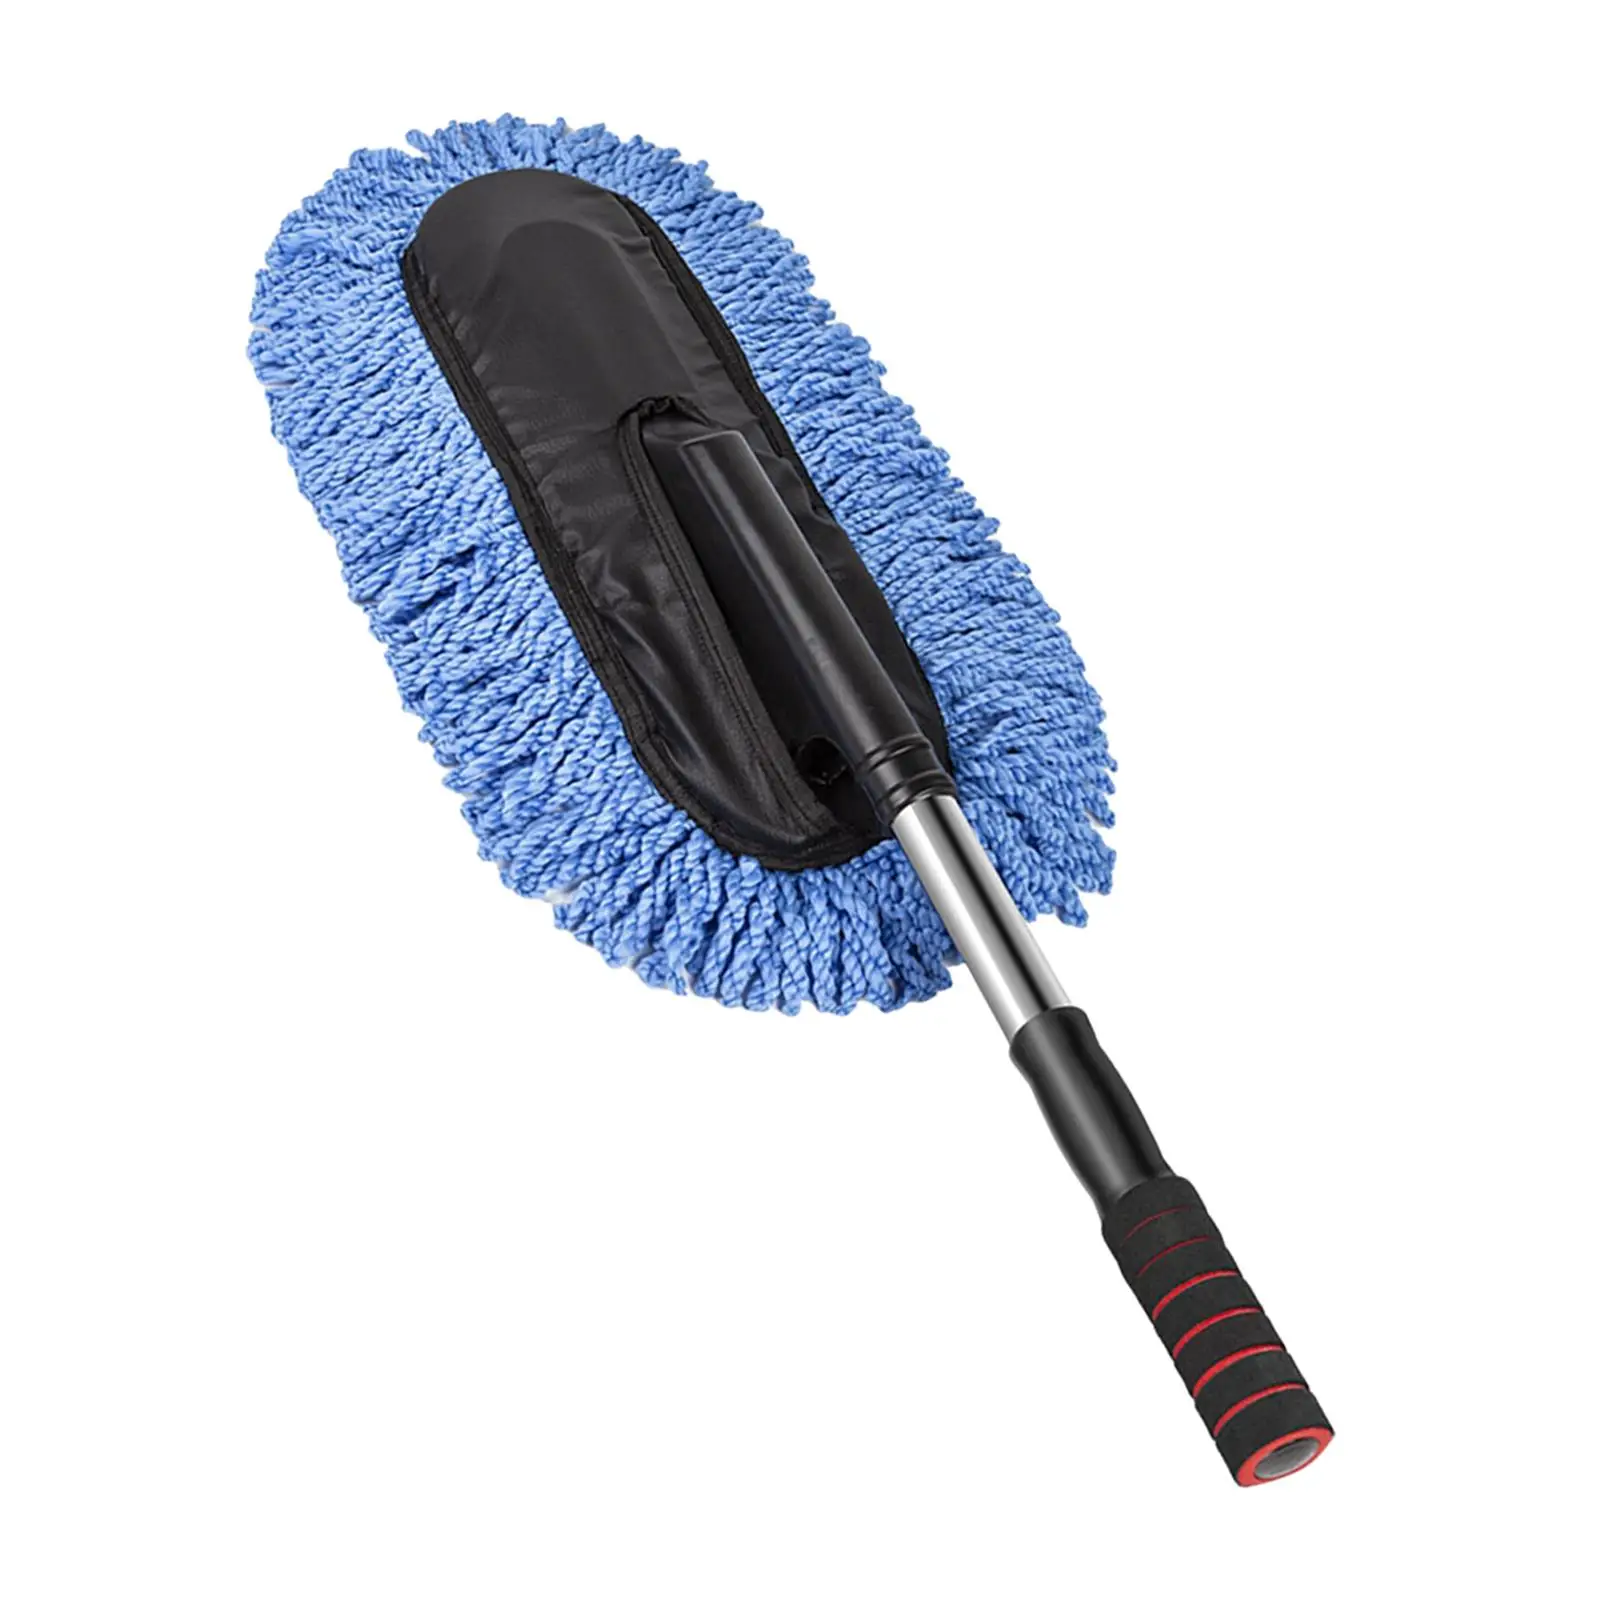 Dirt Dust Clean Brush Microfiber Car Duster for Bathrooms Kitchens Mirrors RV